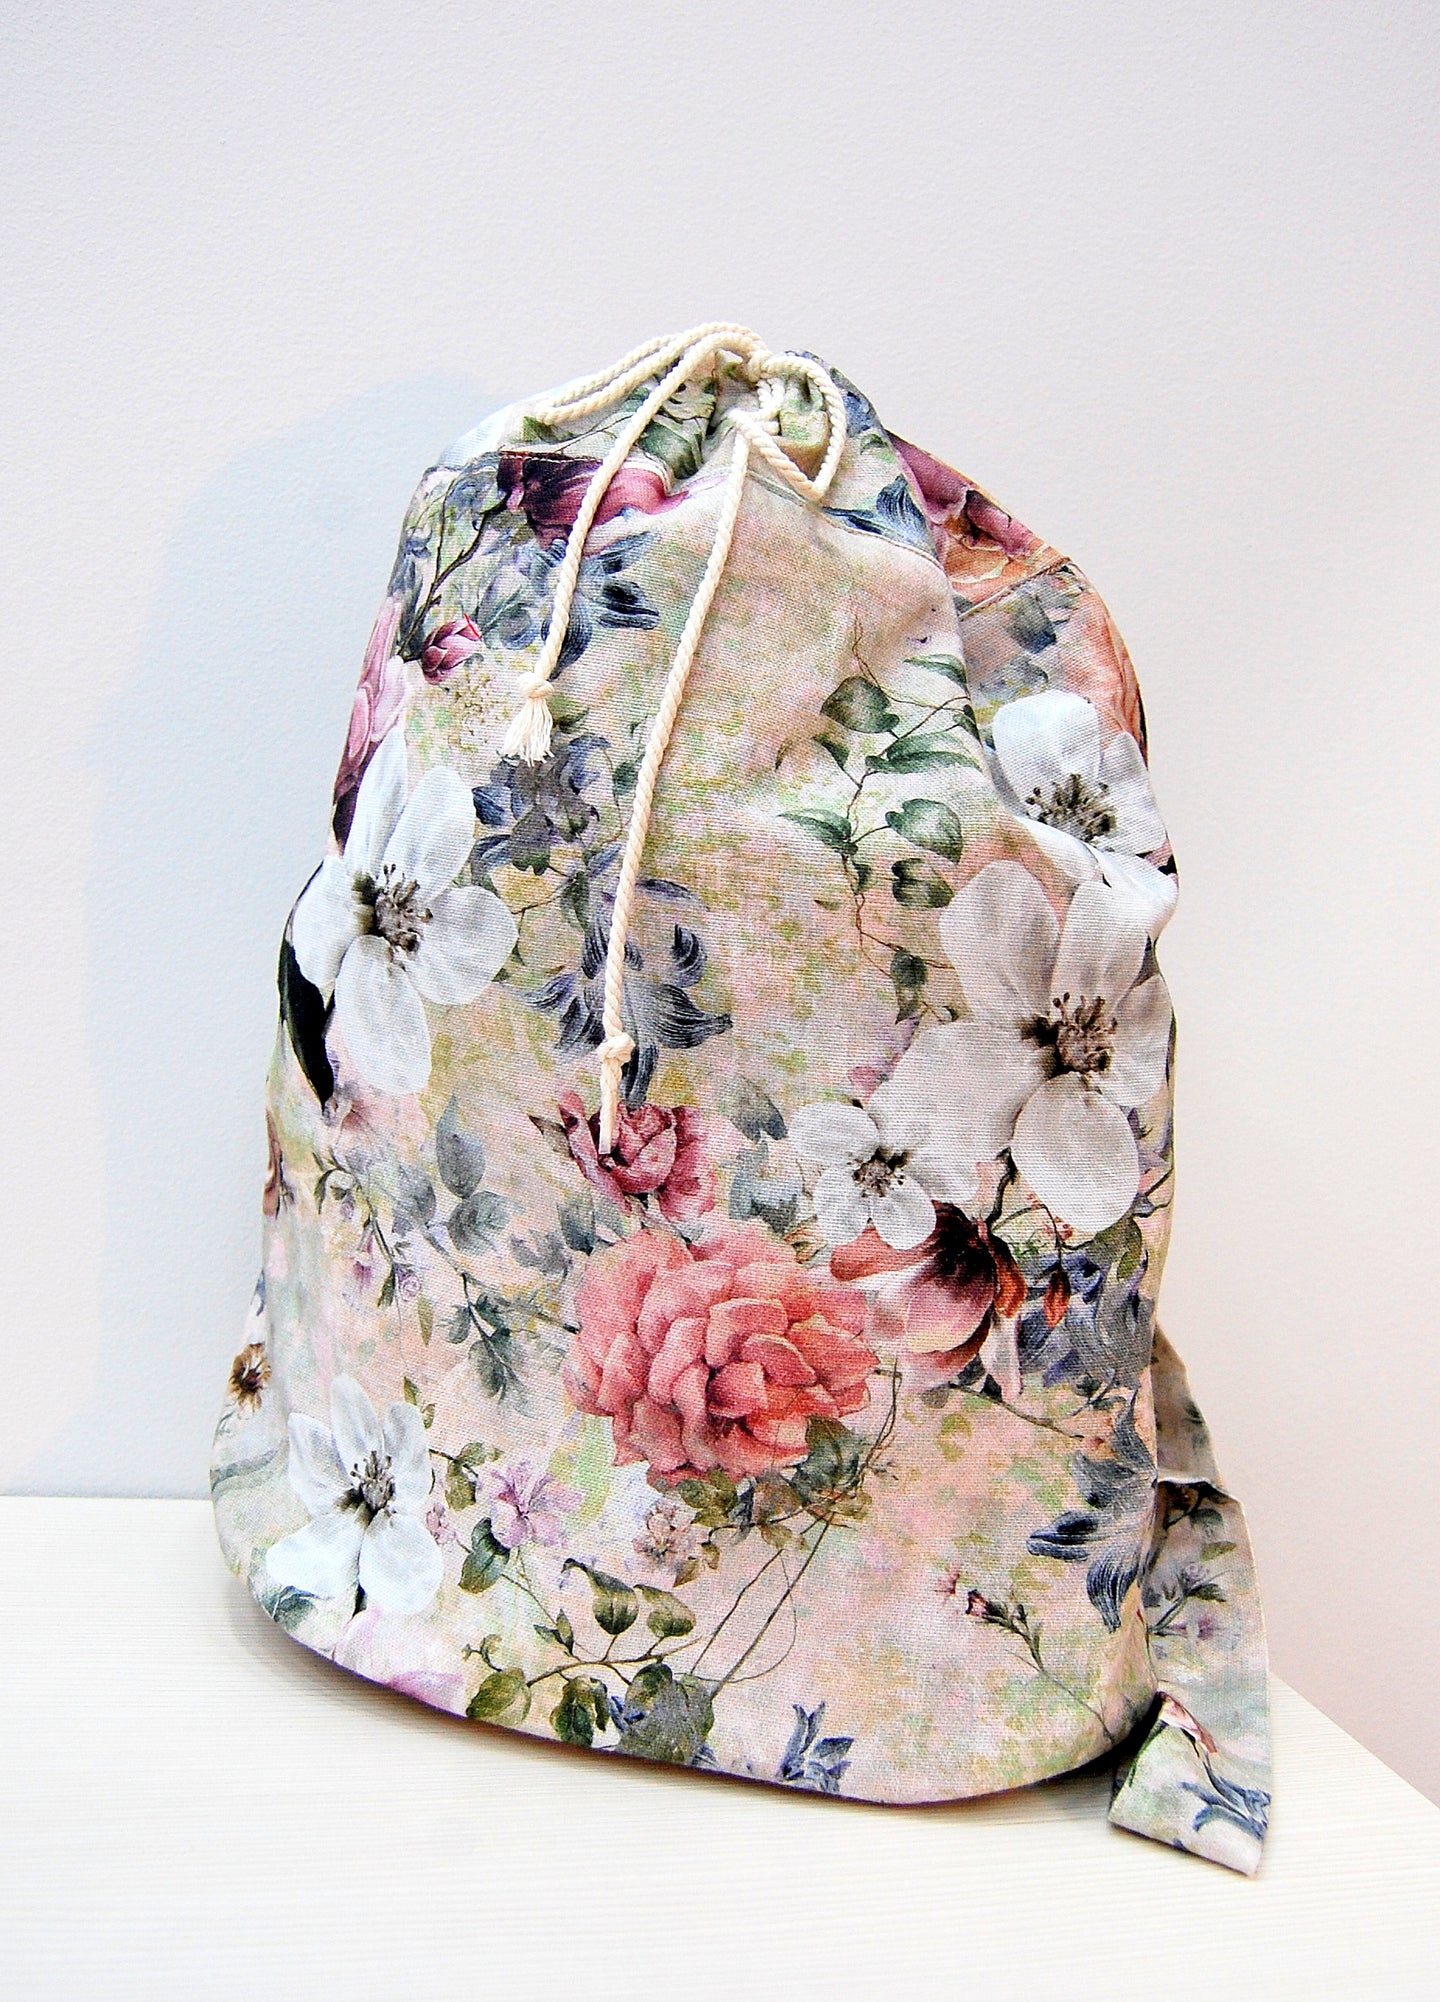 One backpack | So many journeys | Rose